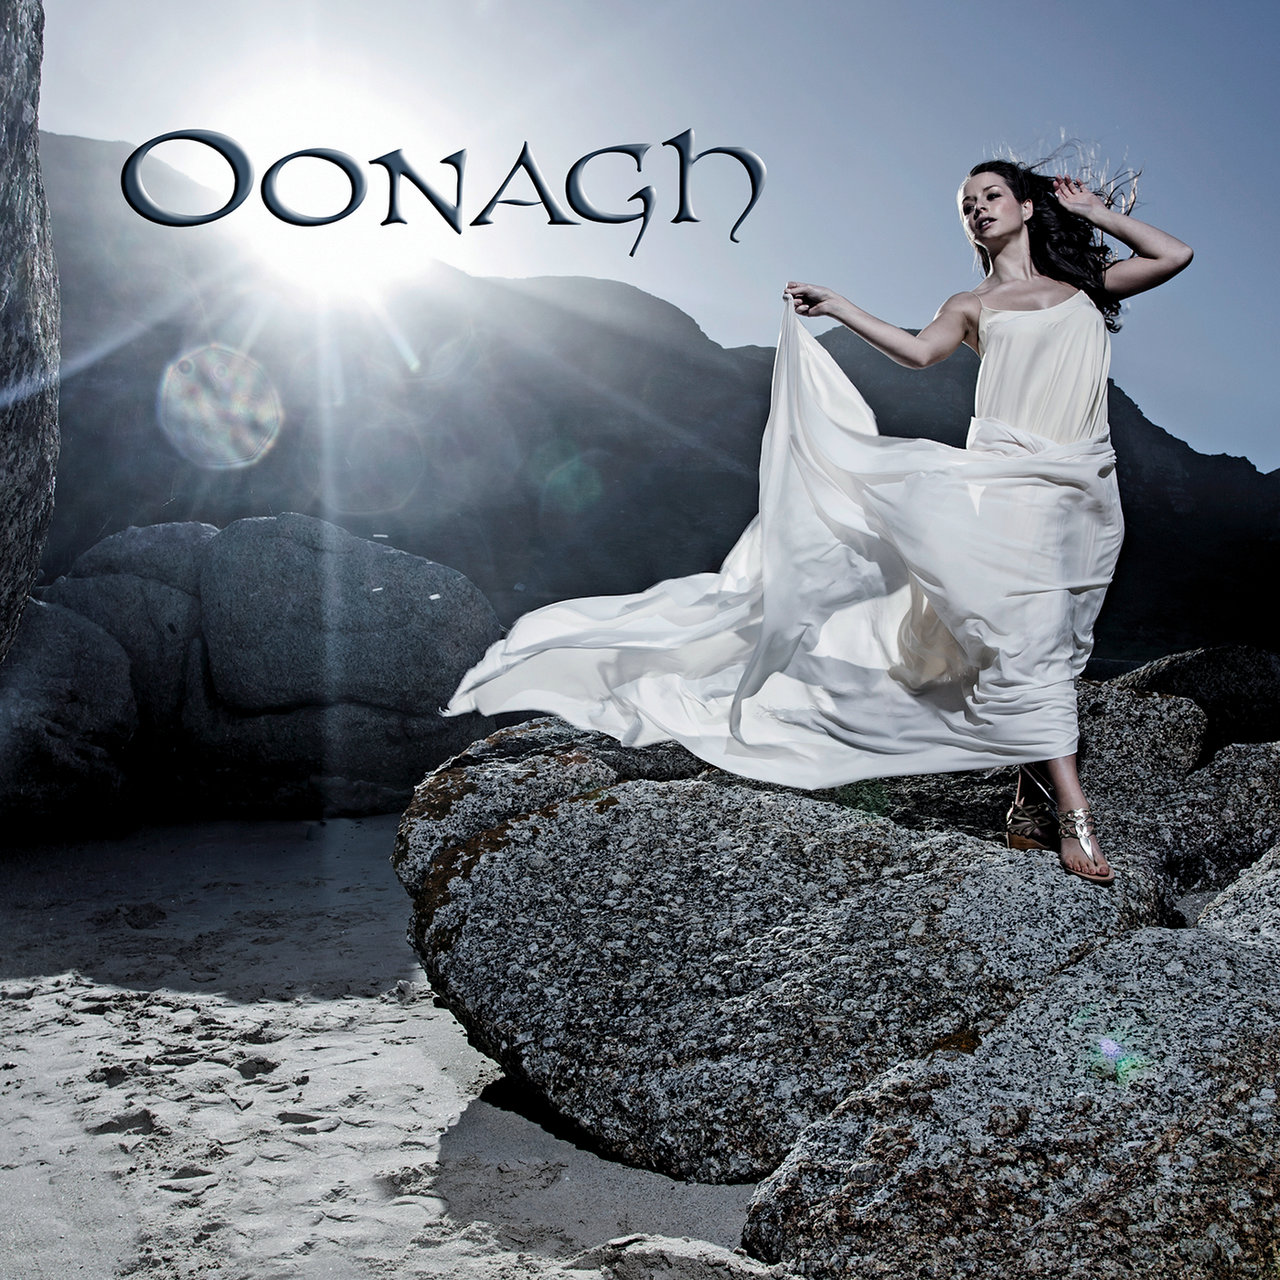 Oonagh Oonagh cover artwork